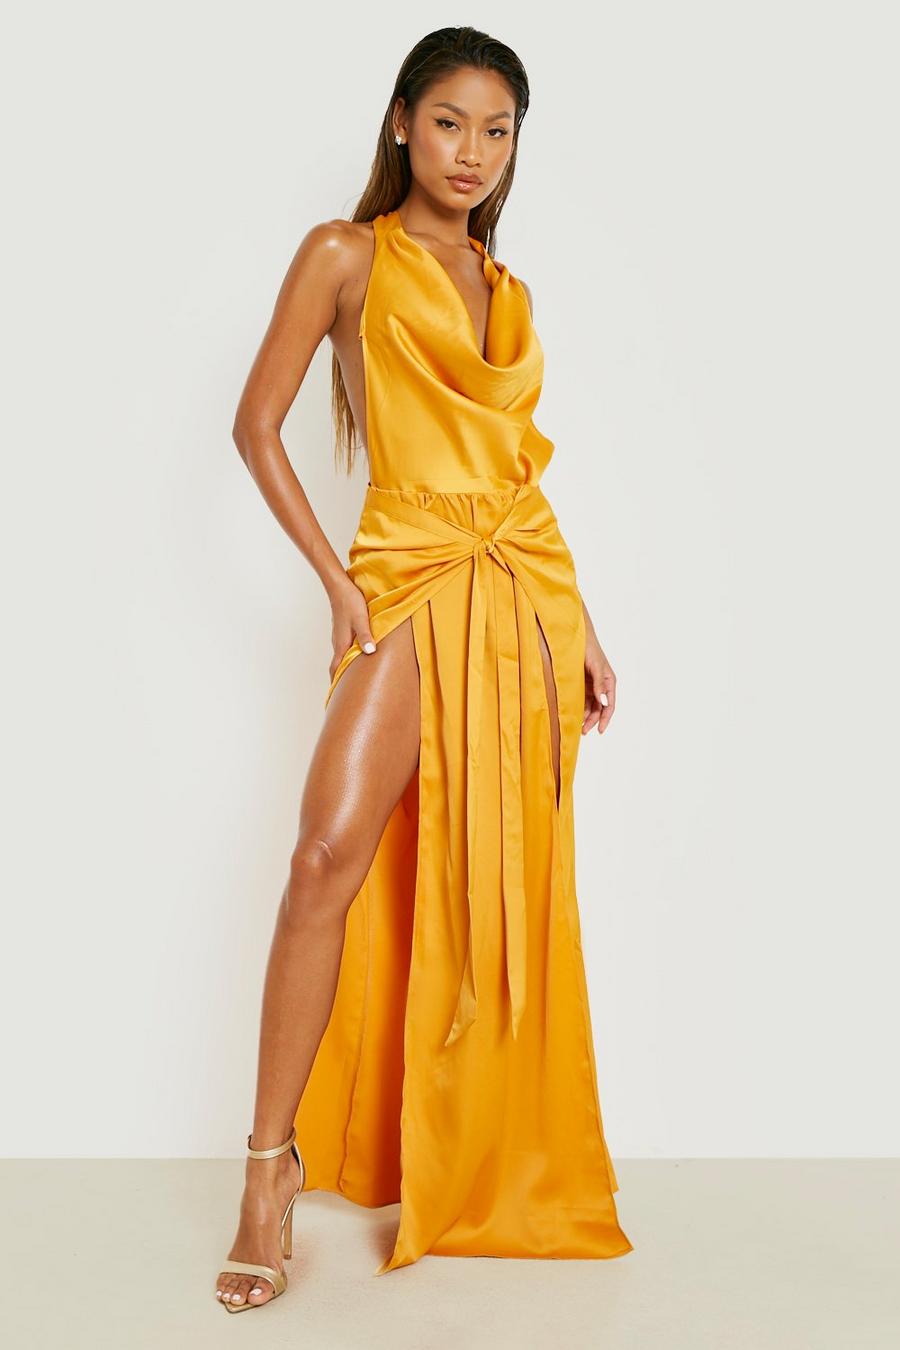 Orange Megan Fox Premium Satin Cowl Neck Drape Maxi Dress - Up to Size 24